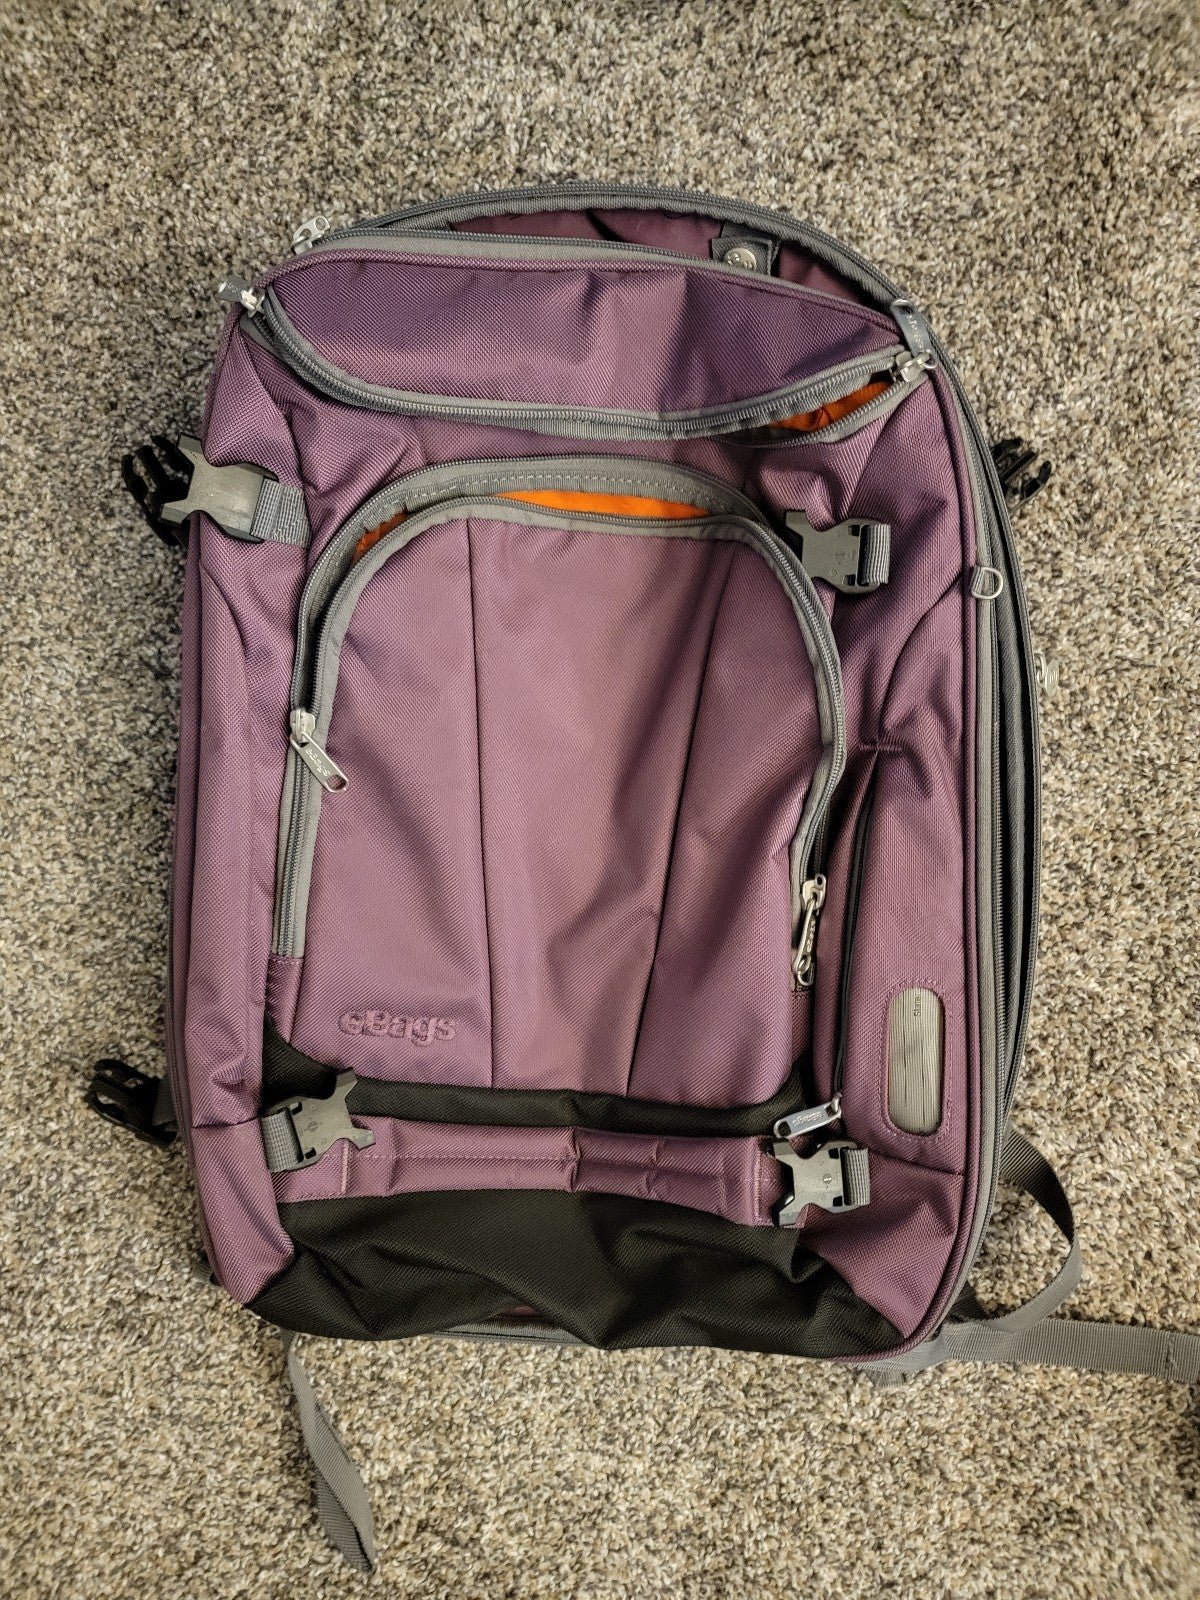 Ebags Motherload Jr Travel backpack dG3KAiX3L